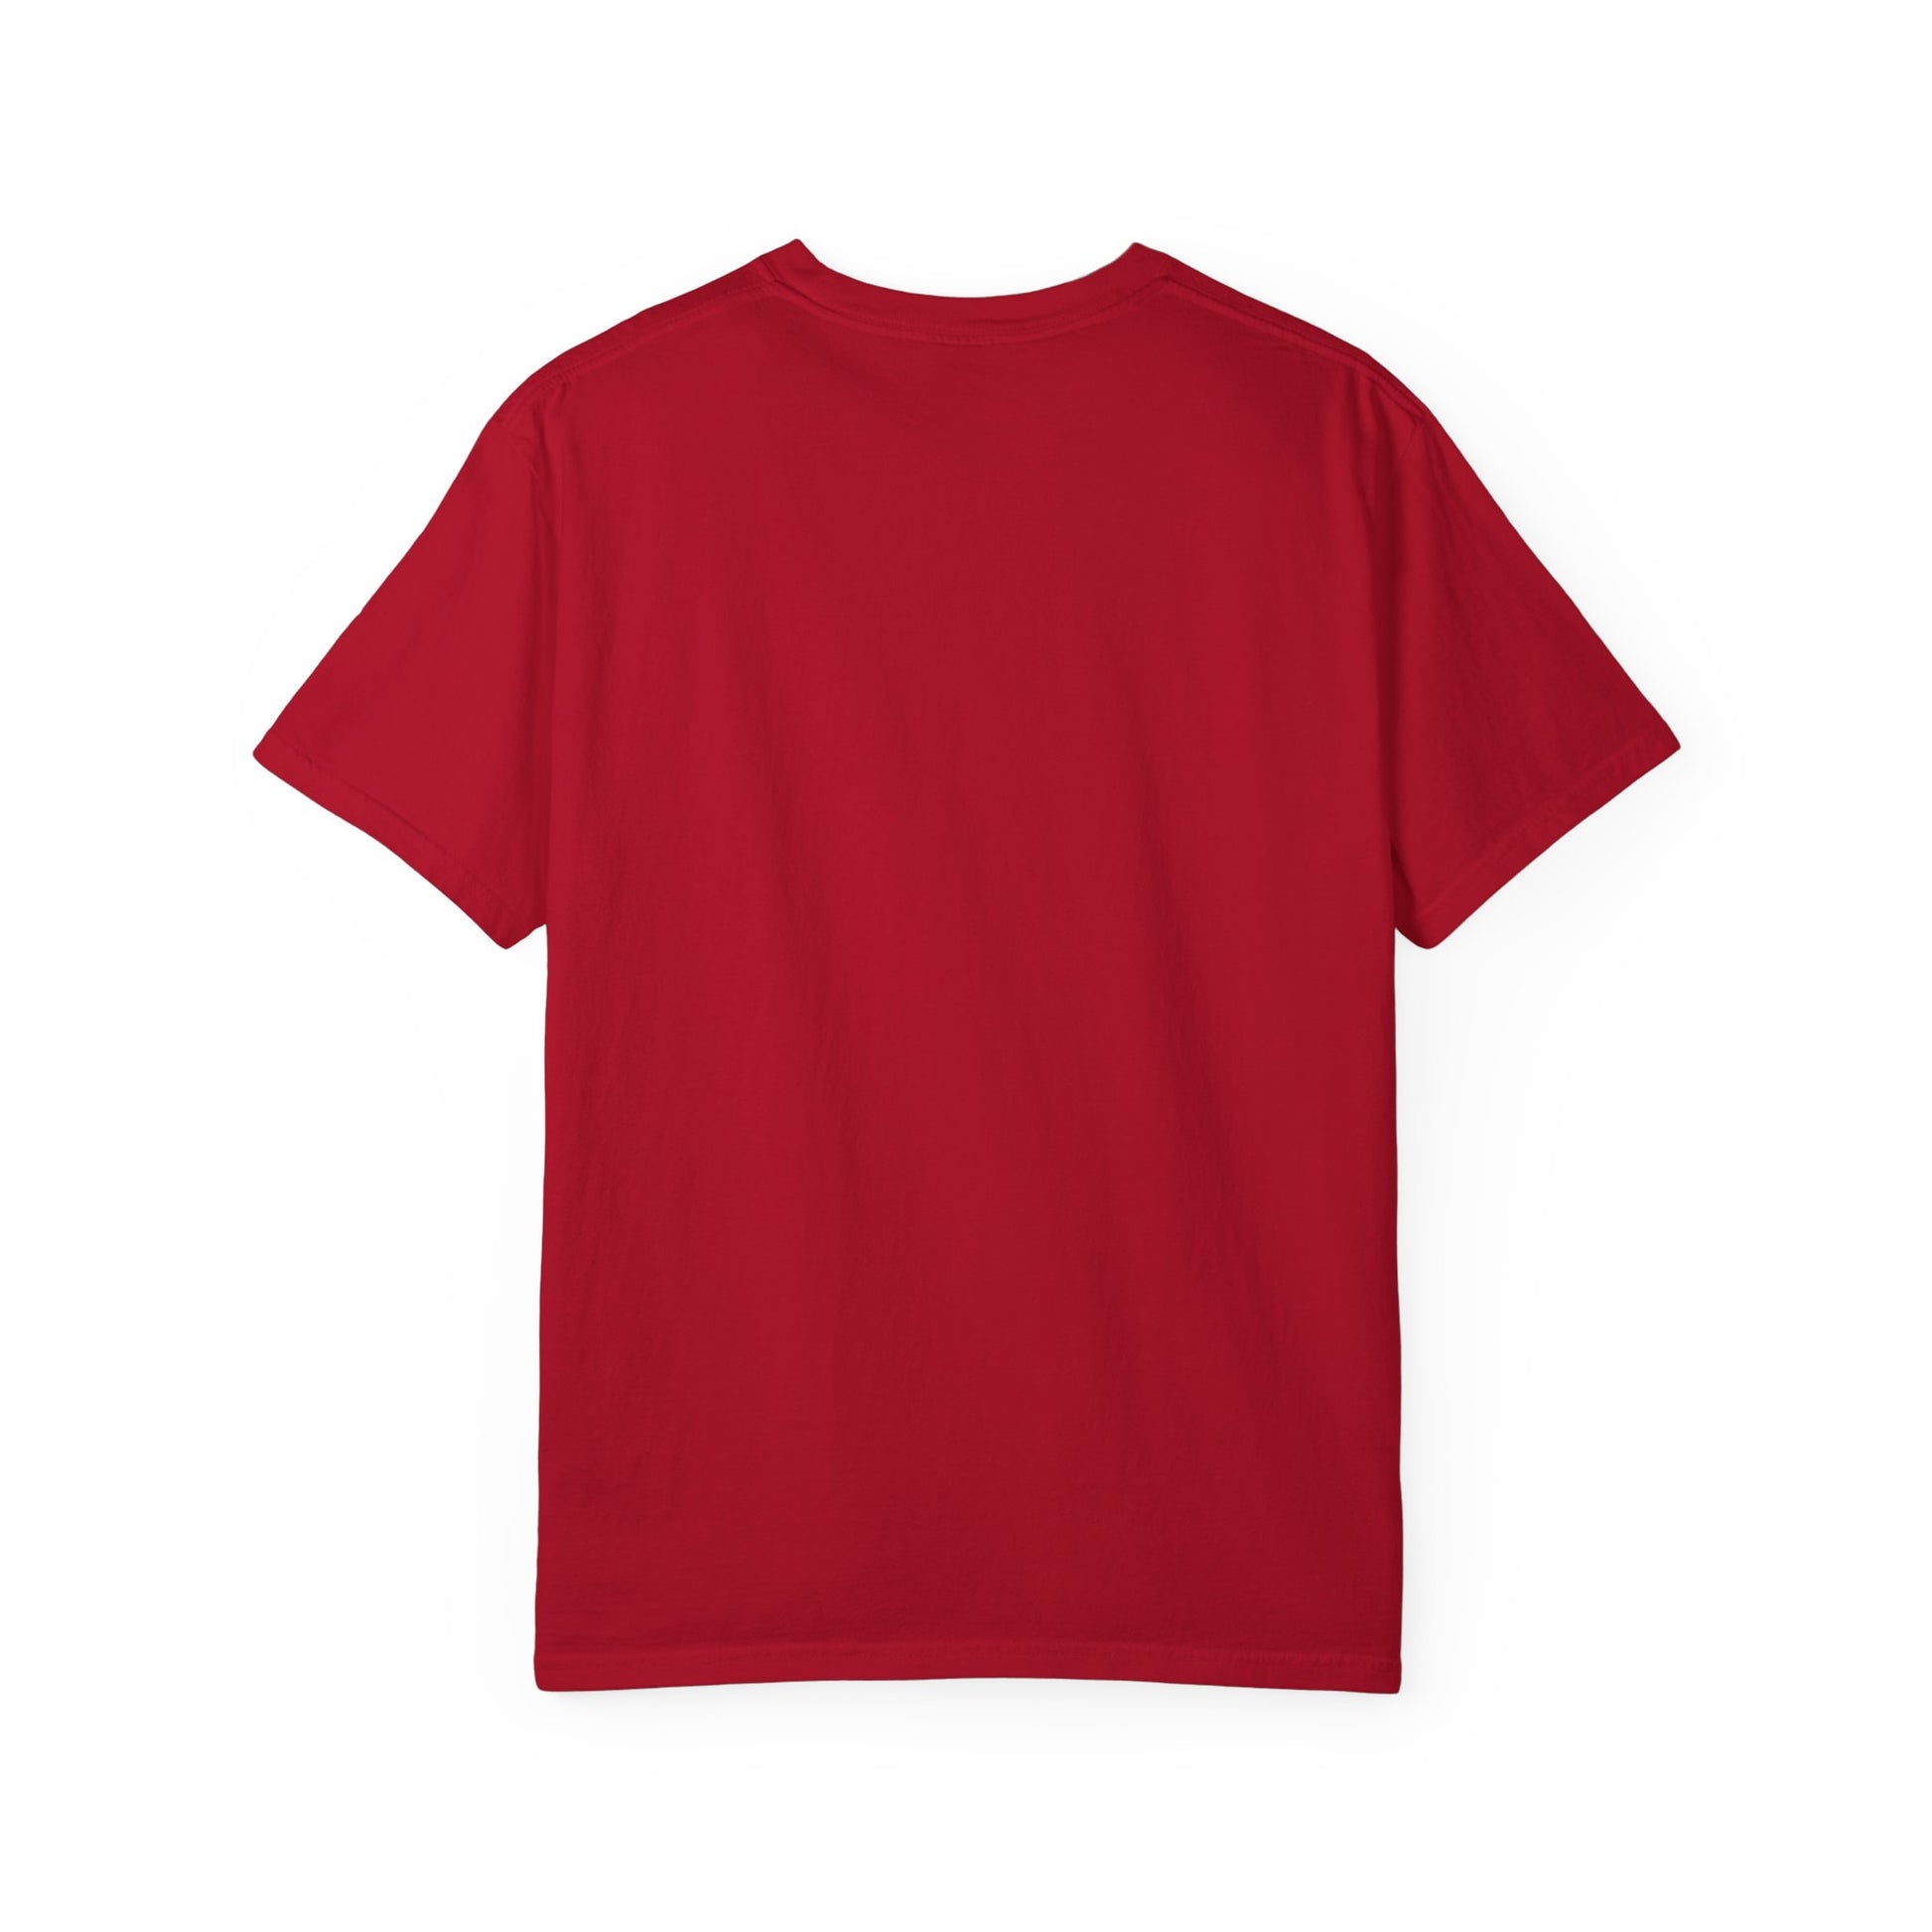 Hip Hop Teddy Bear Graphic Unisex Garment-dyed T-shirt Cotton Funny Humorous Graphic Soft Premium Unisex Men Women Red T-shirt Birthday Gift-22